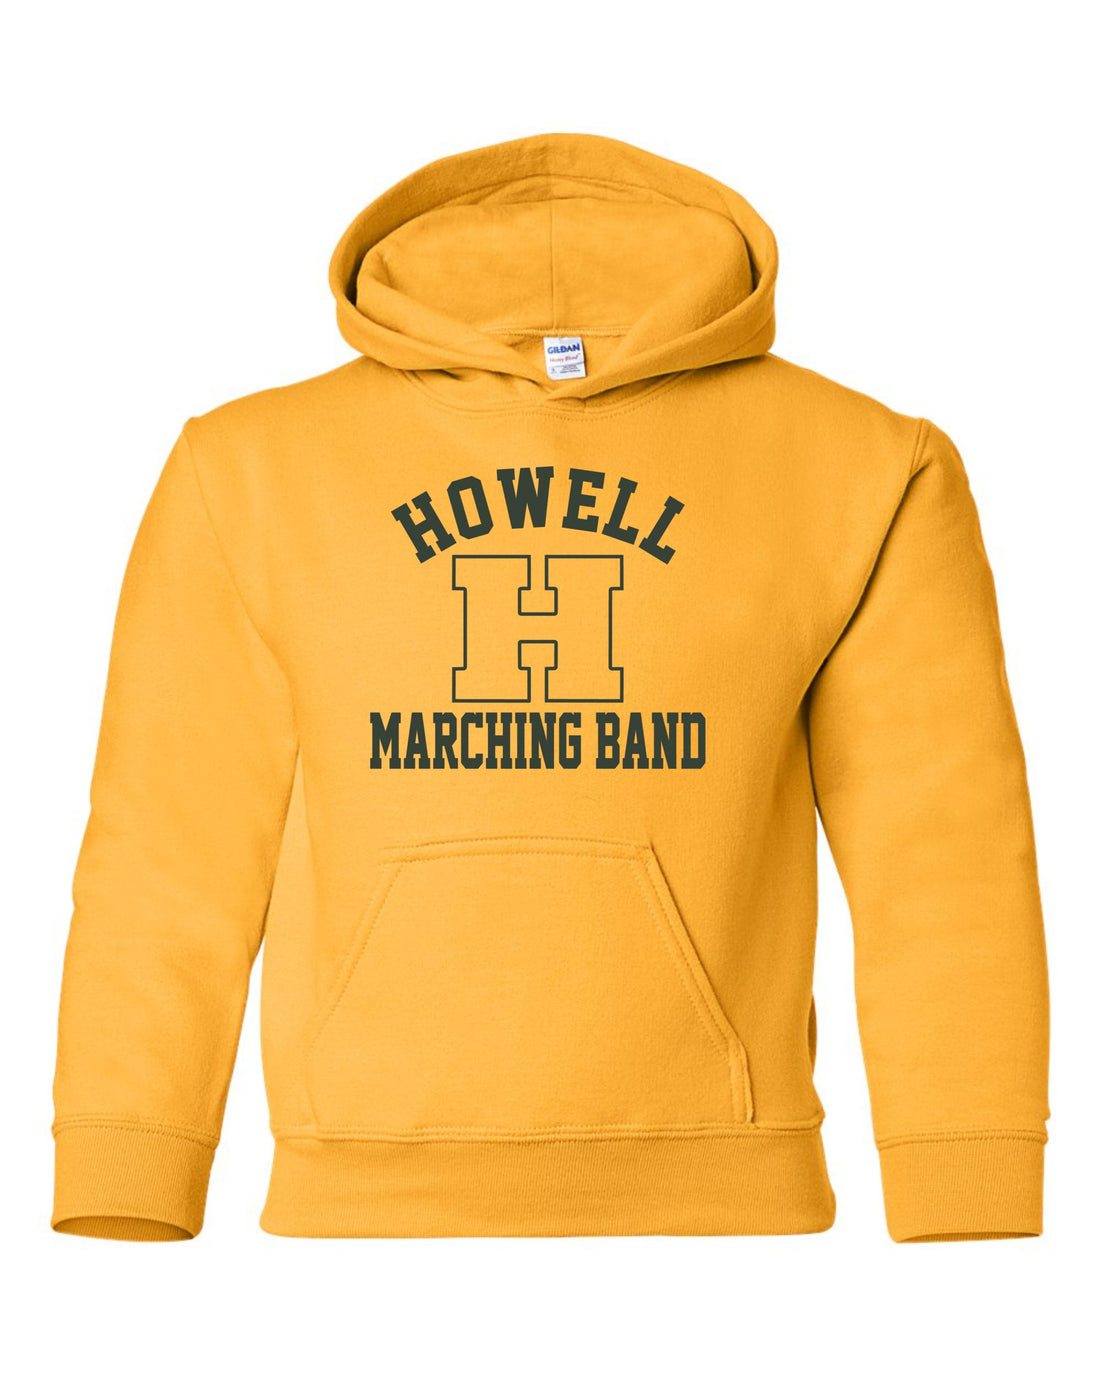 Howell Marching Band Hooded Sweatshirt